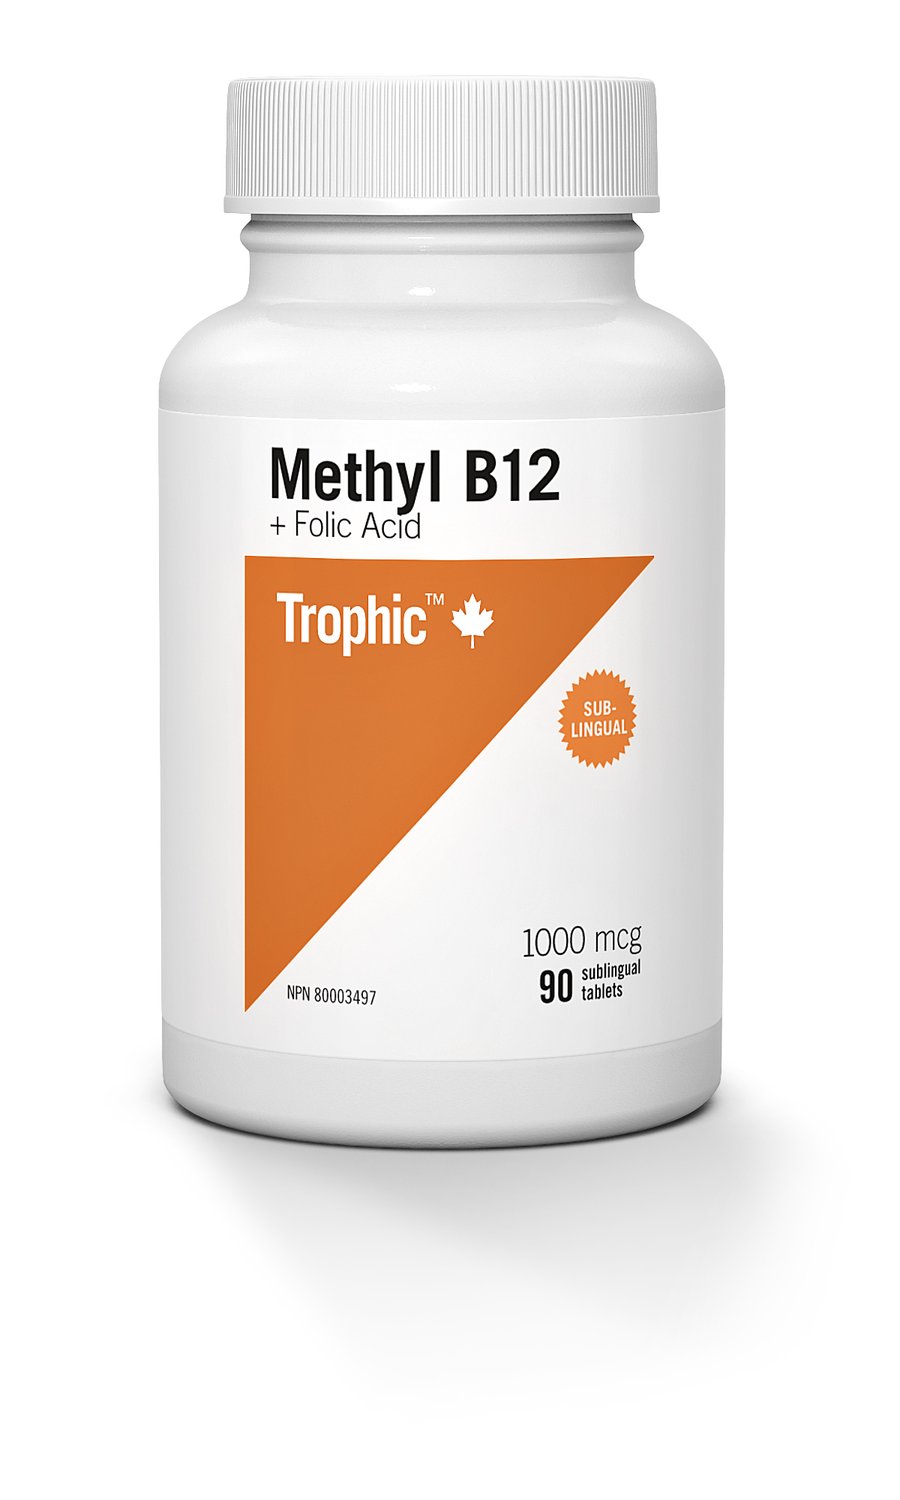 Trophic Methyl B12 + Folic Acid 90 Sublingual Tablets